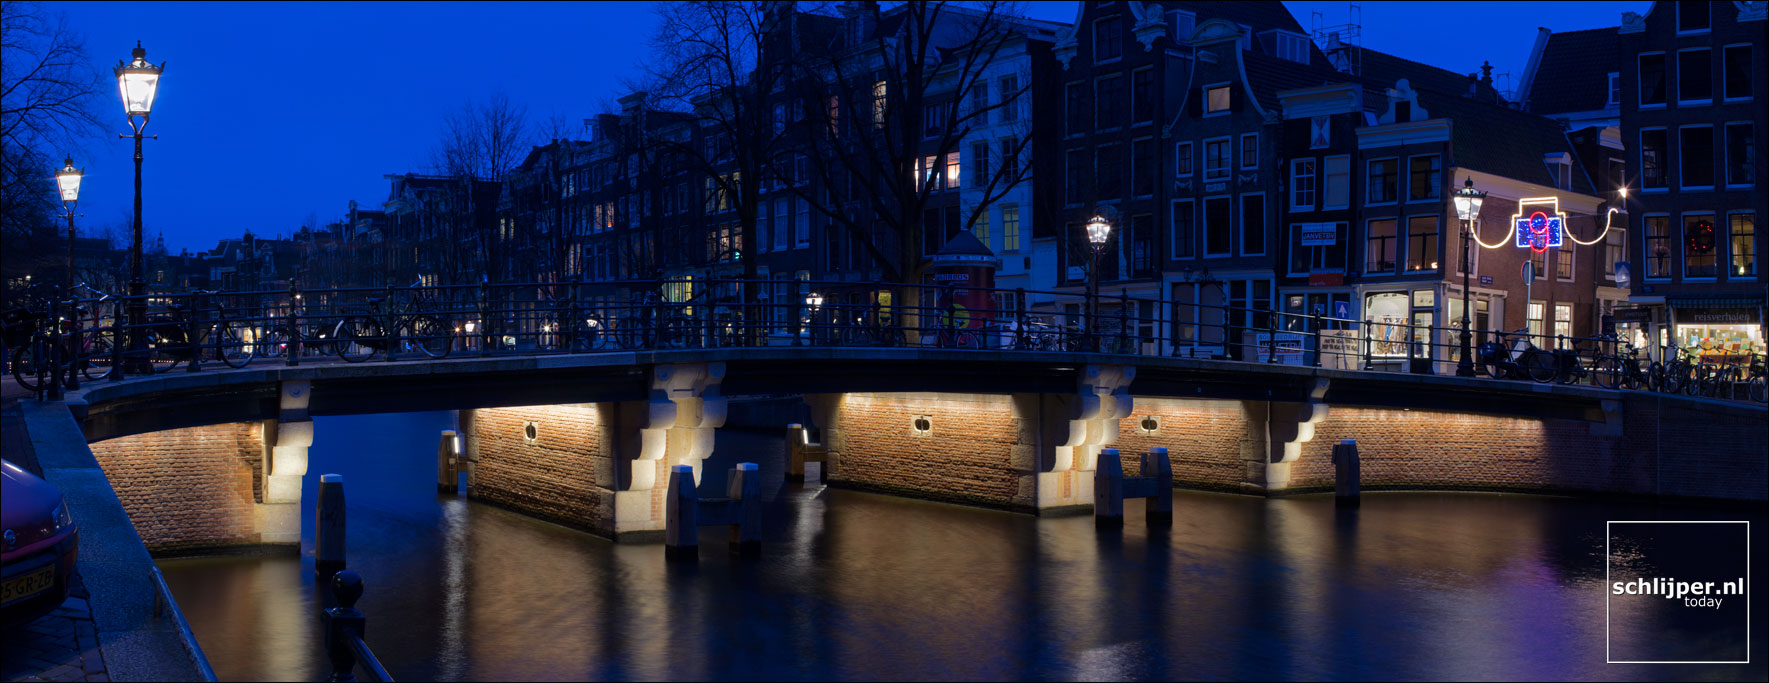 Nederland, Amsterdam, 11 januari 2015